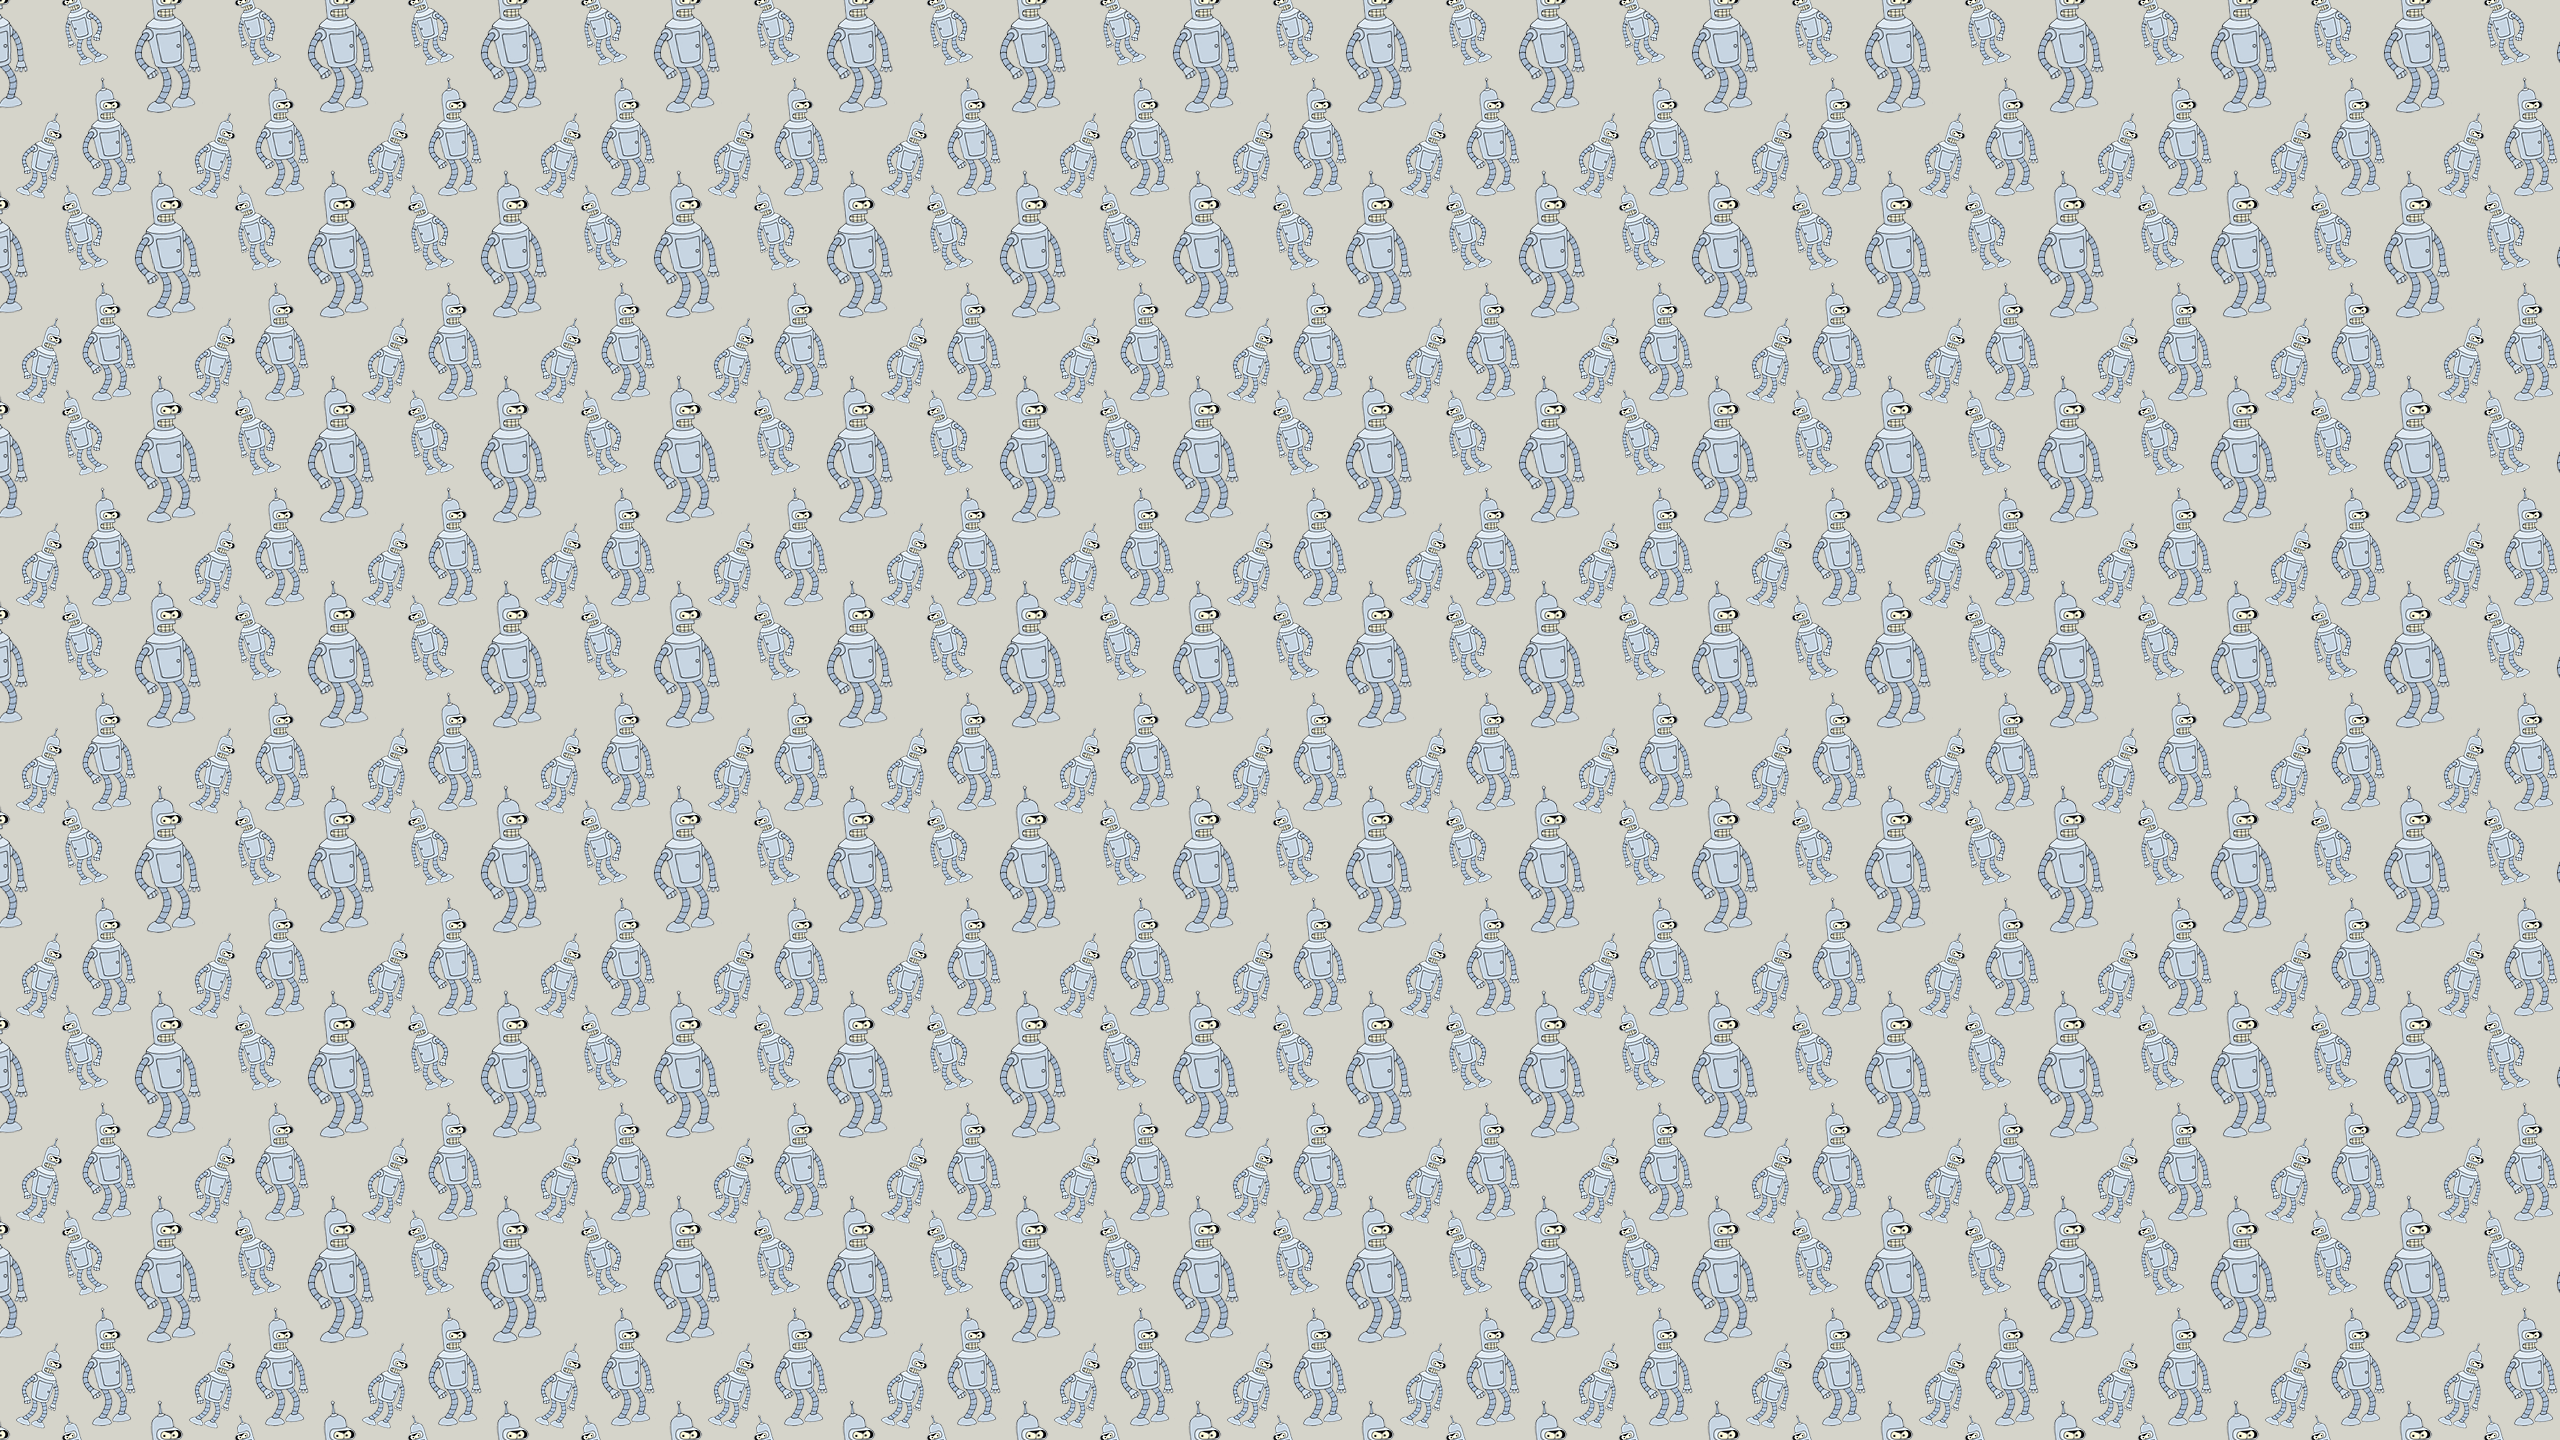 Futurama Bender Desktop Wallpaper Is Easy Just Save The